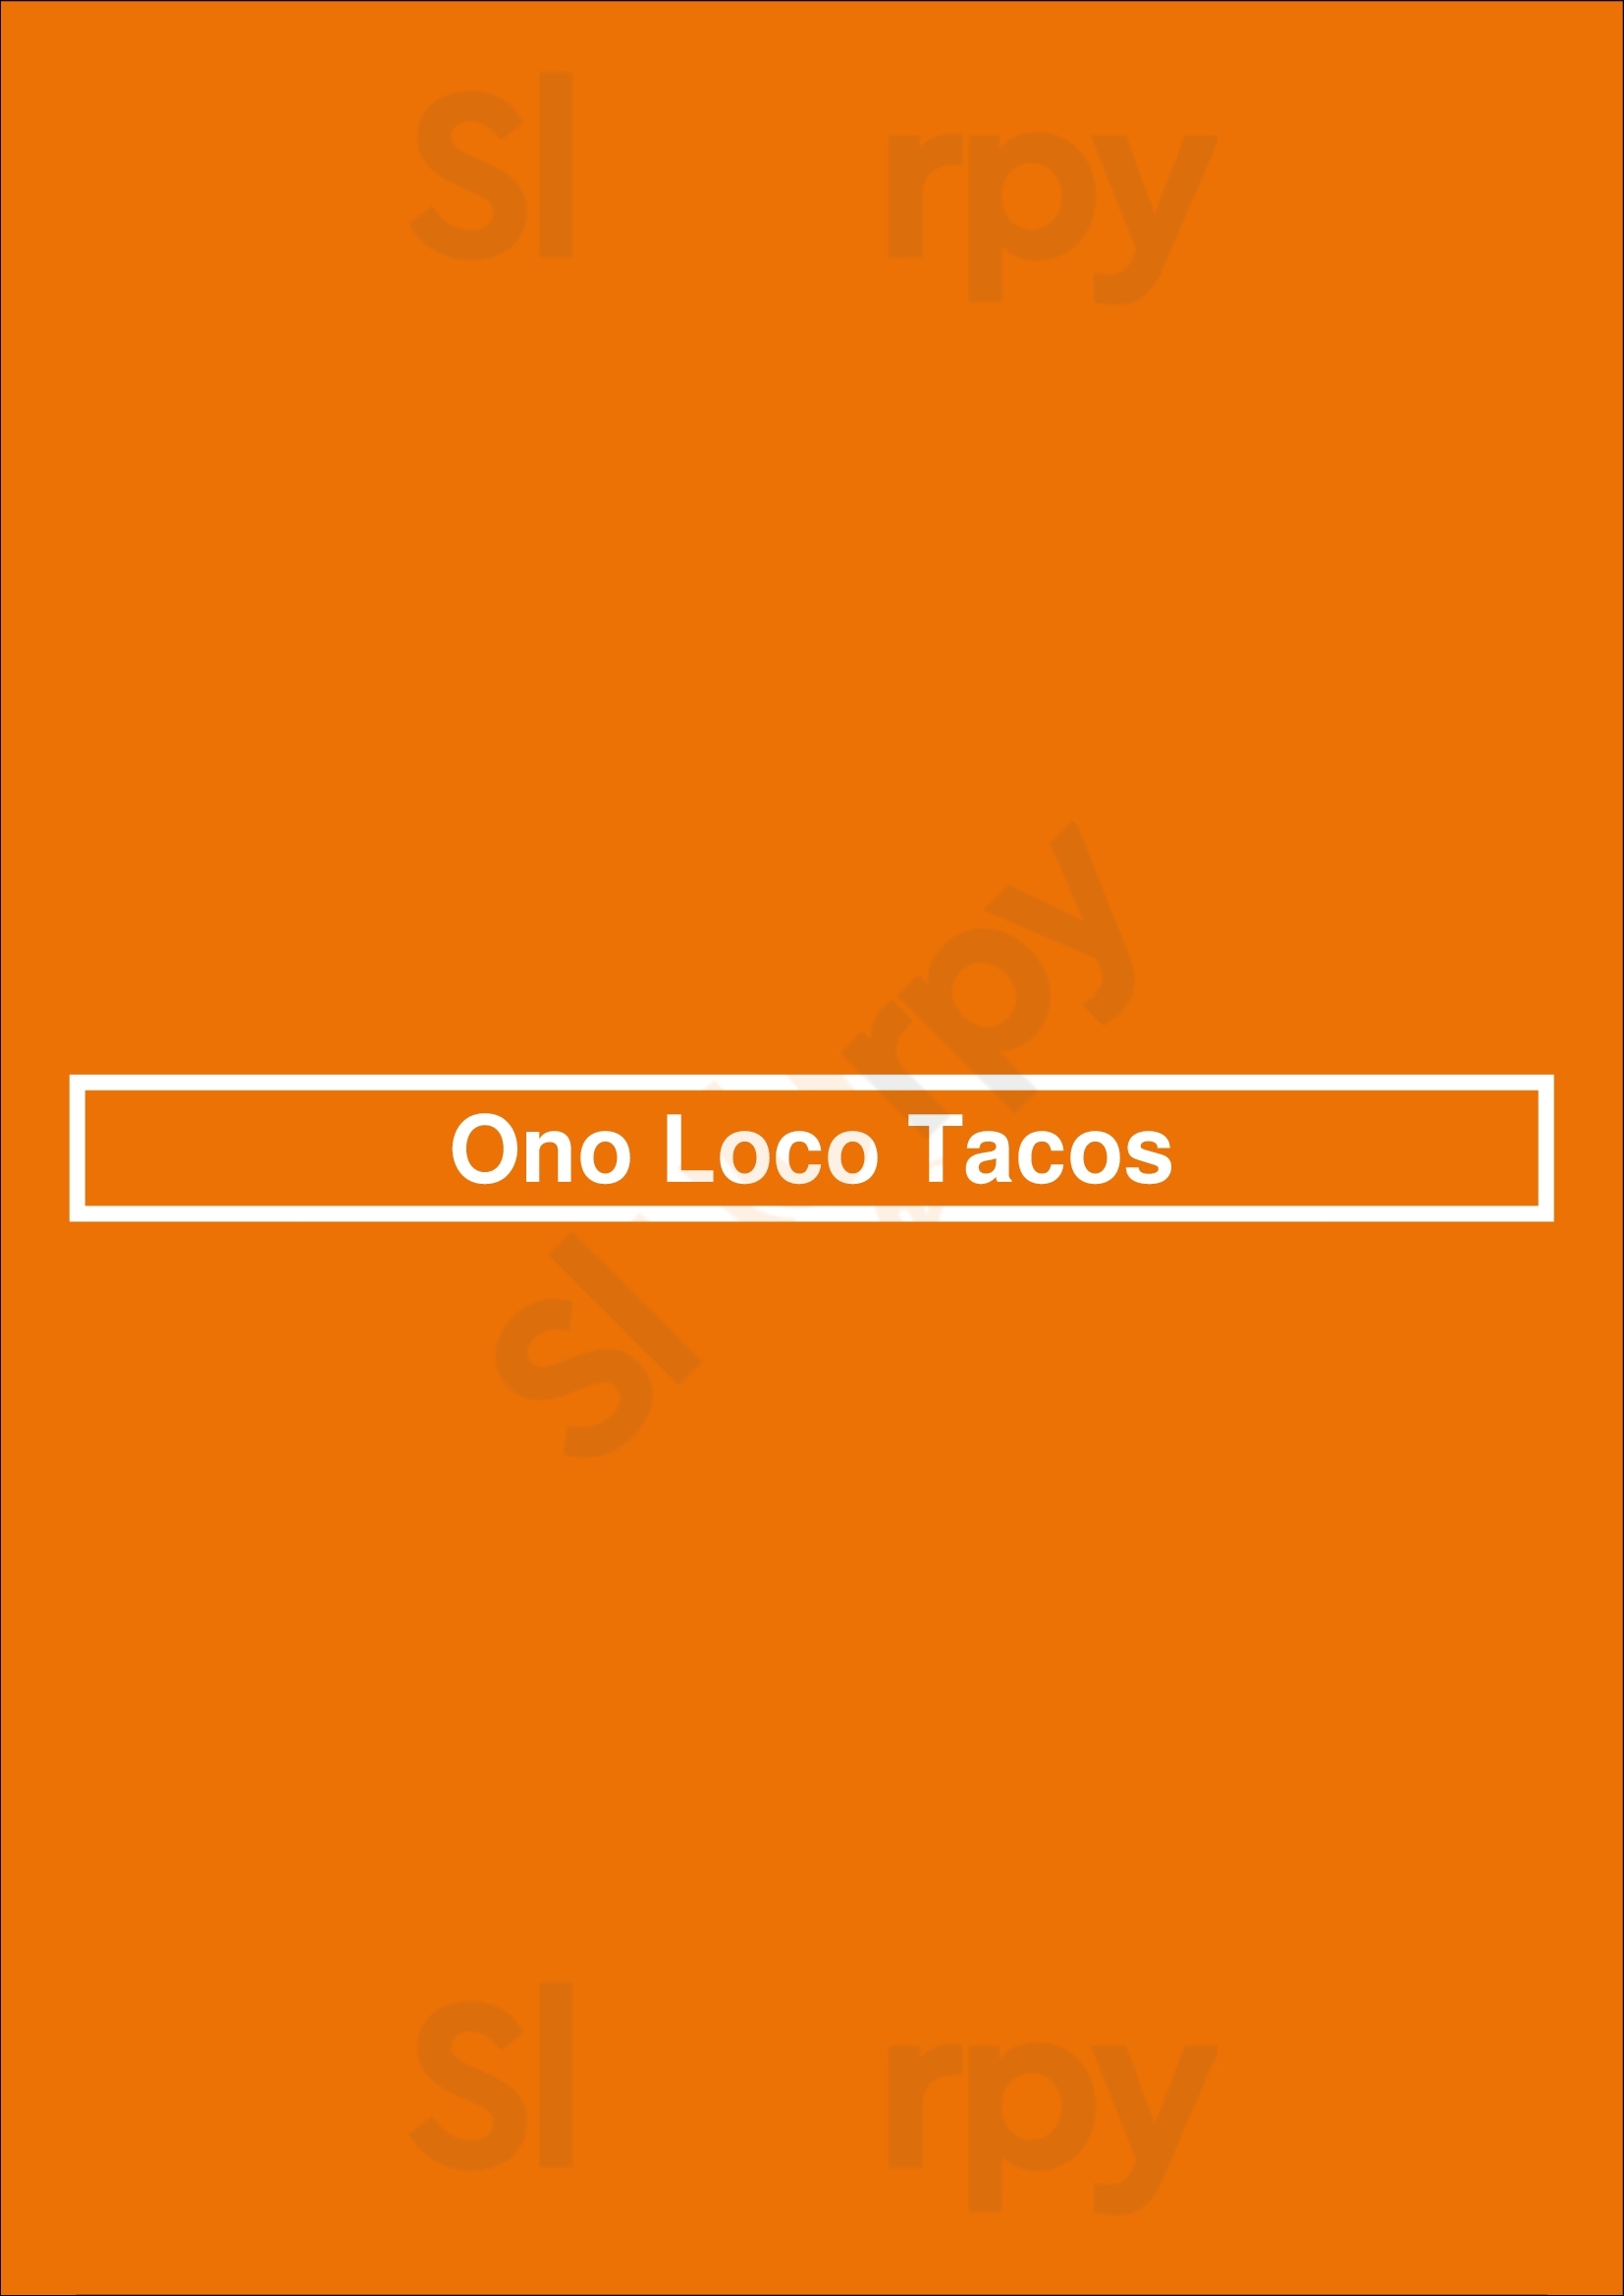 Ono Loco Tacos Honolulu Menu - 1